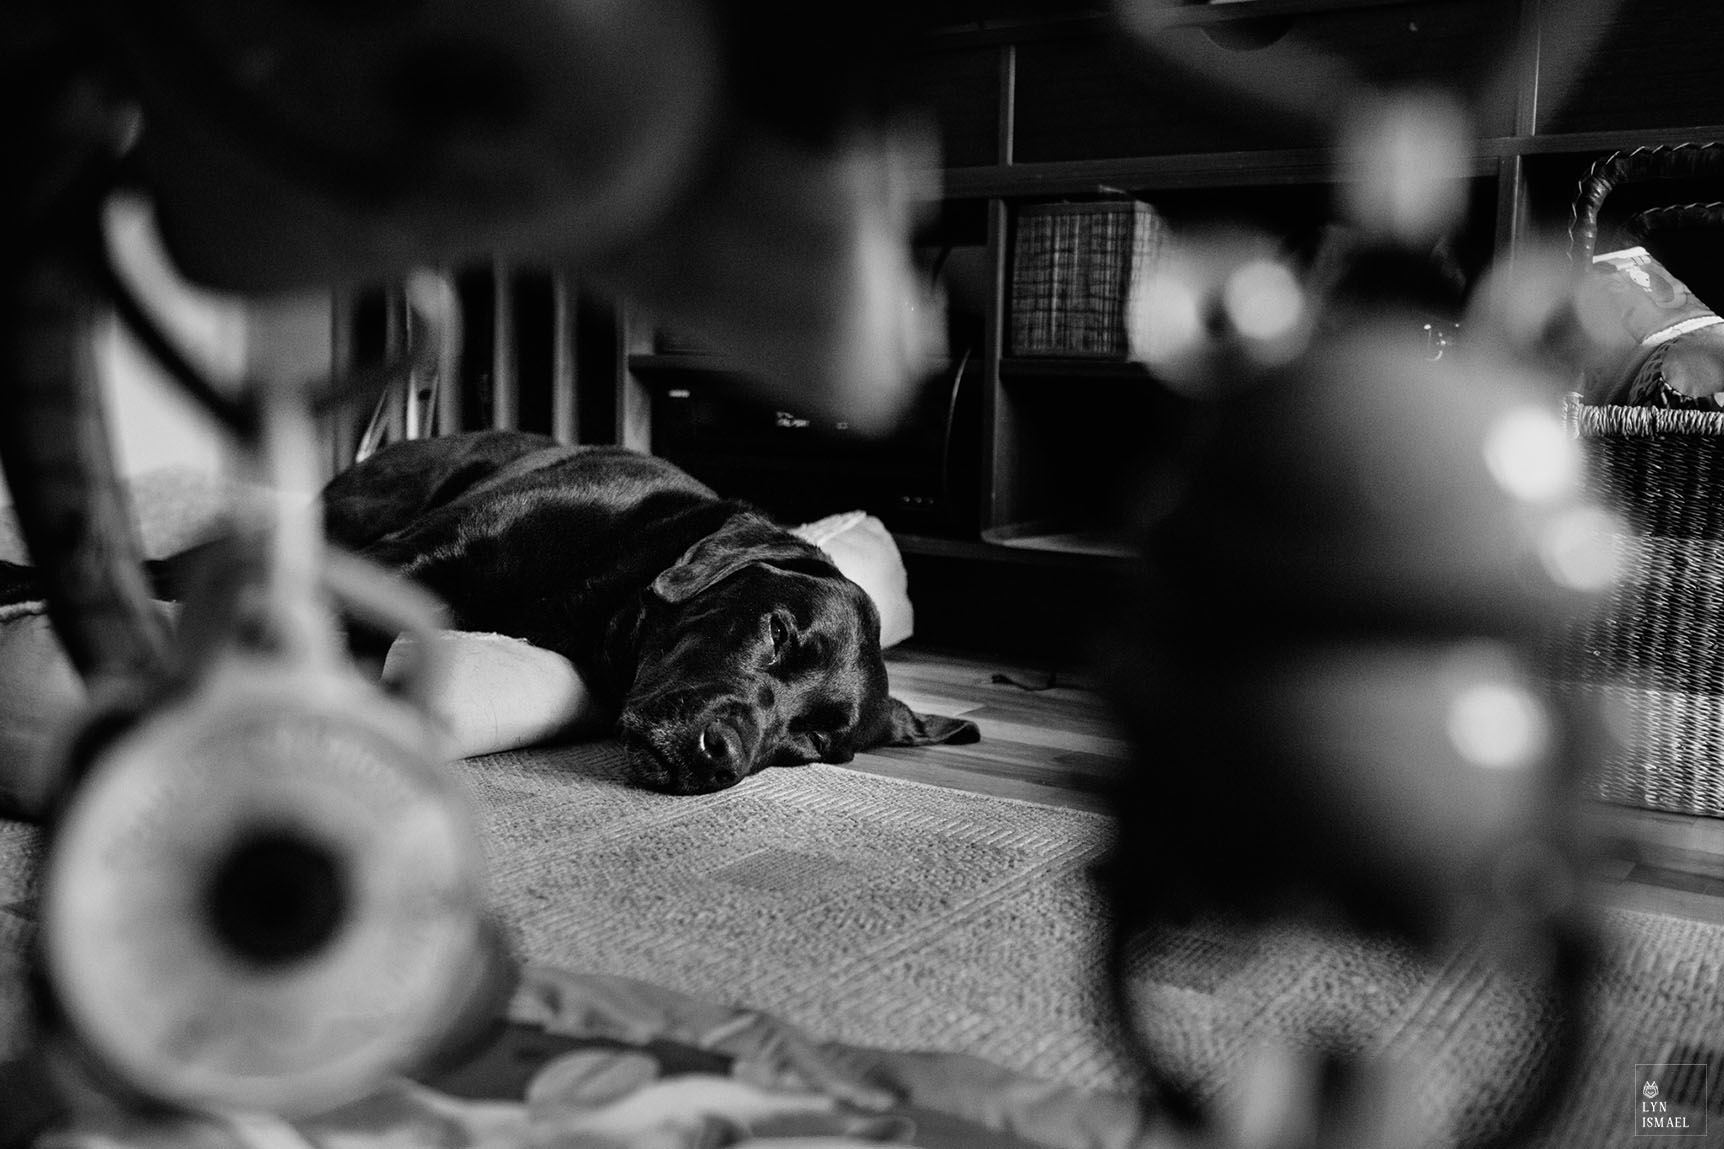 Kitchener family documentary photographer photographs a black lab sleeping.